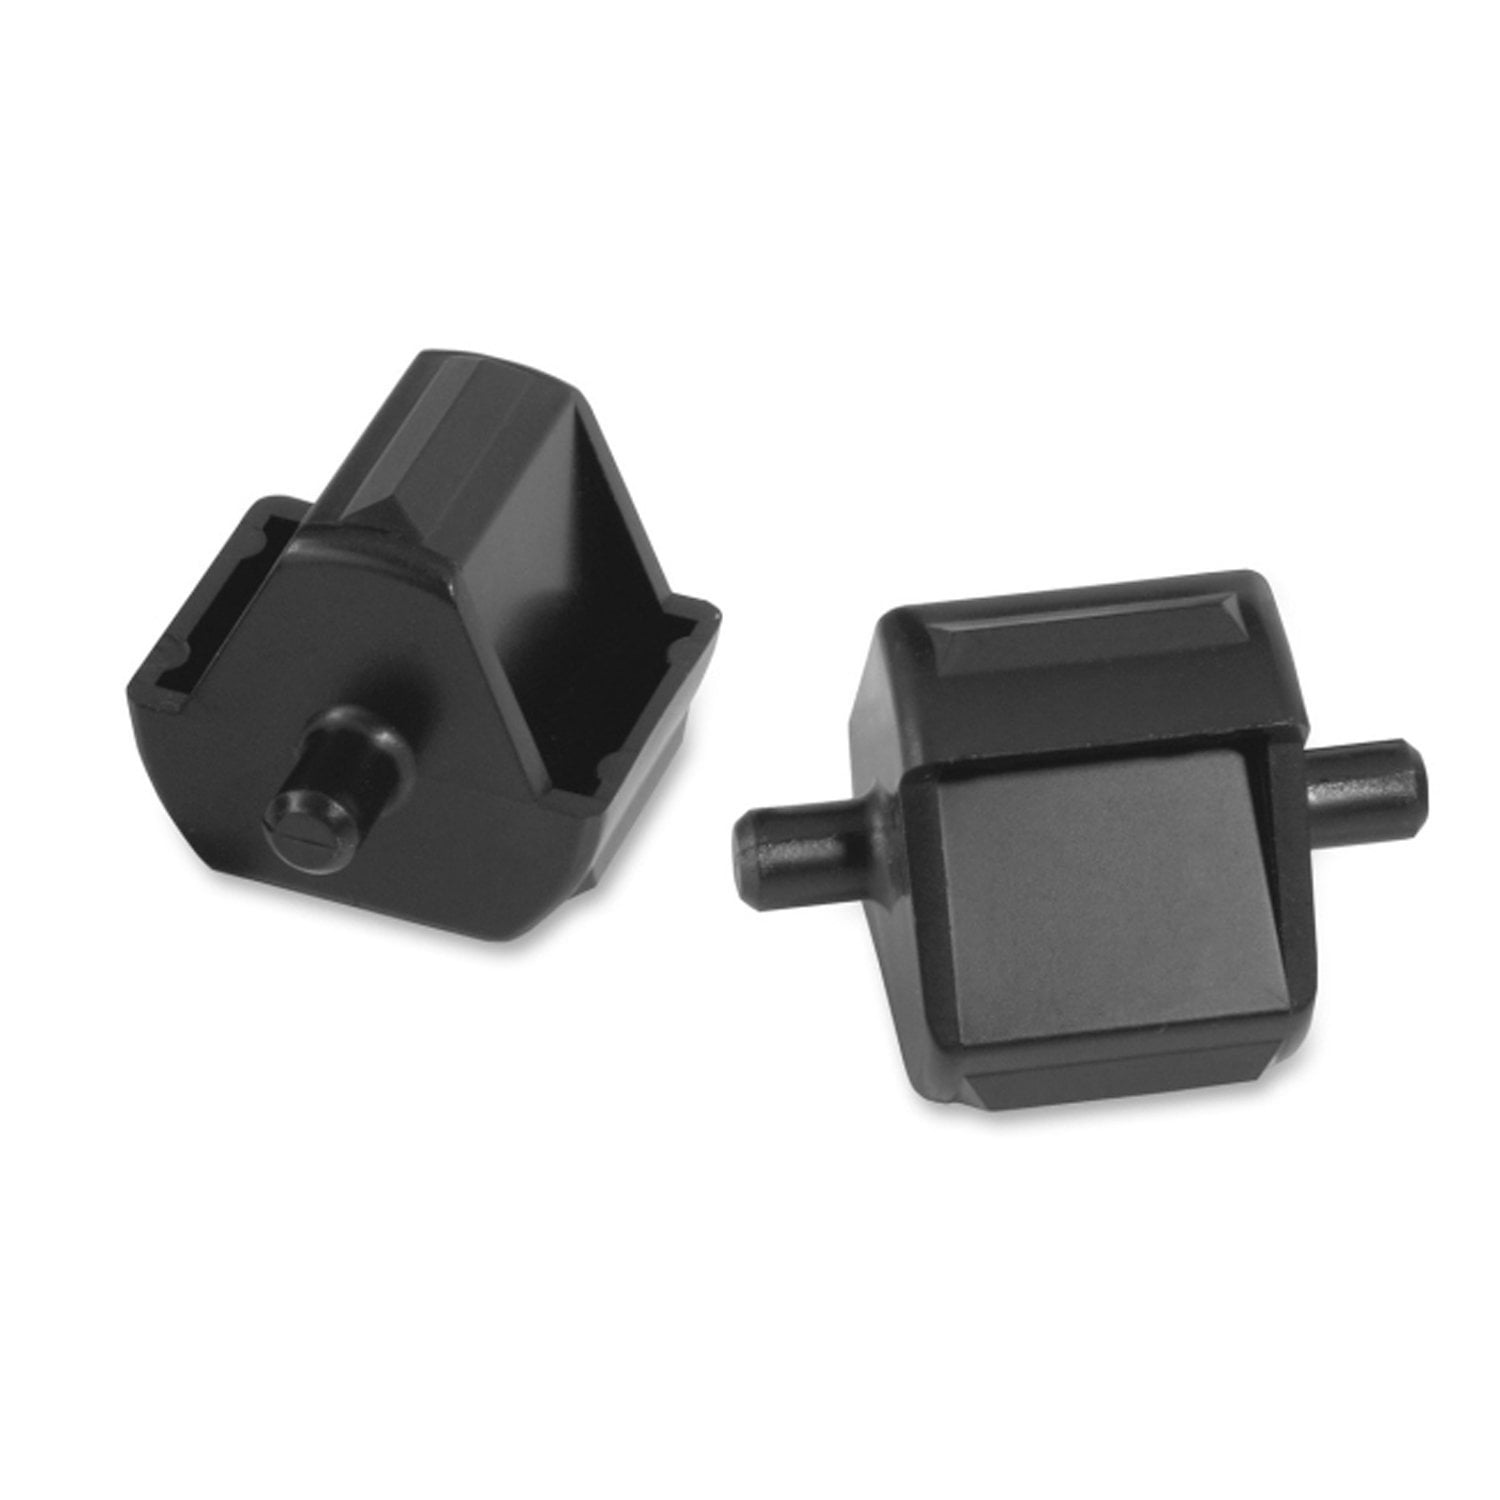 IHOMECOOKER 2Rolls 10mm x33m（108ft）Heat Tape Desktop and Tape Dispenser Black Fits 1 & 3 Core